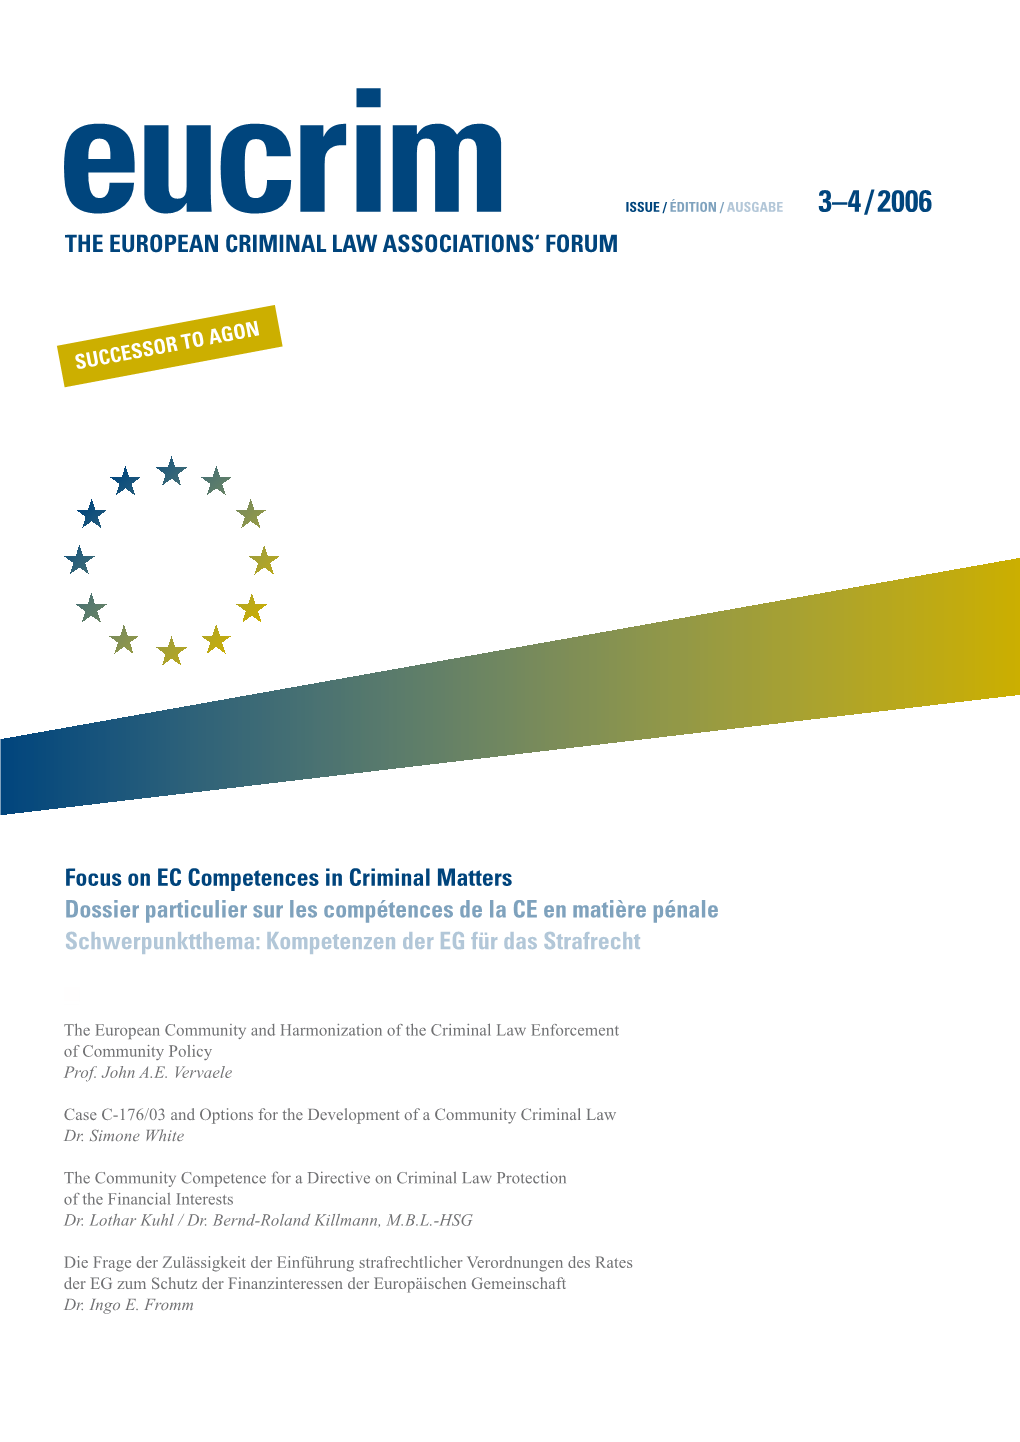 THE EUROPEAN CRIMINAL LAW ASSOCIATIONS' FORUM Focus On